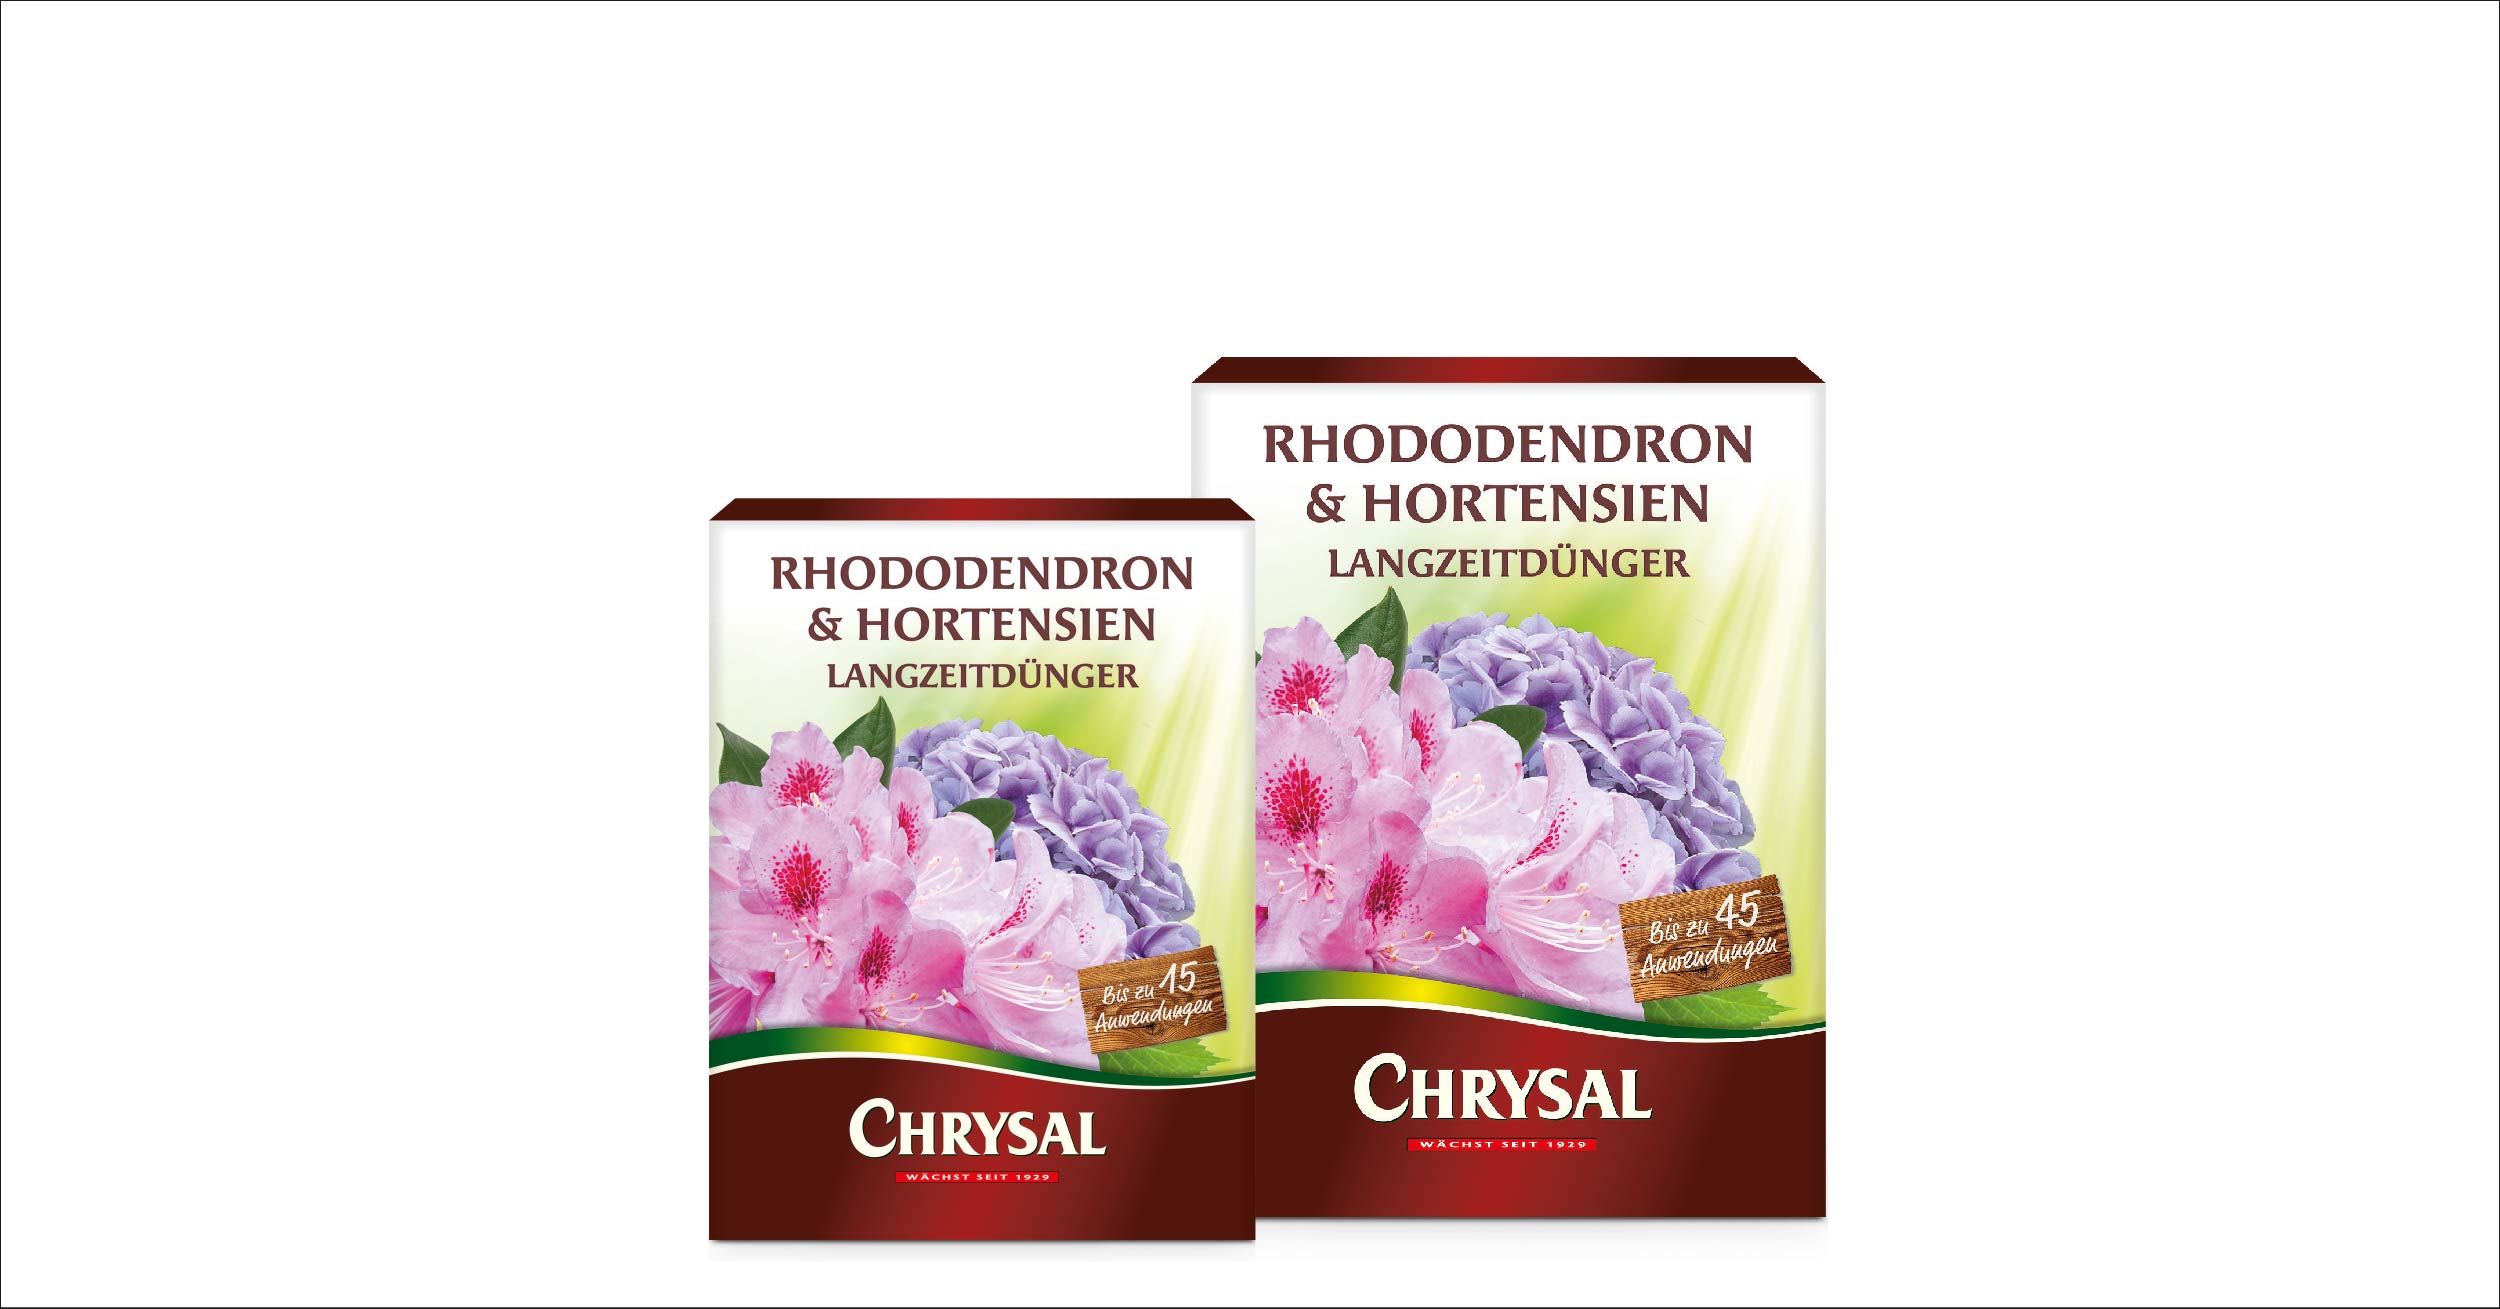 Chrysal Rhododendron & Hortensien Langzeitdünger